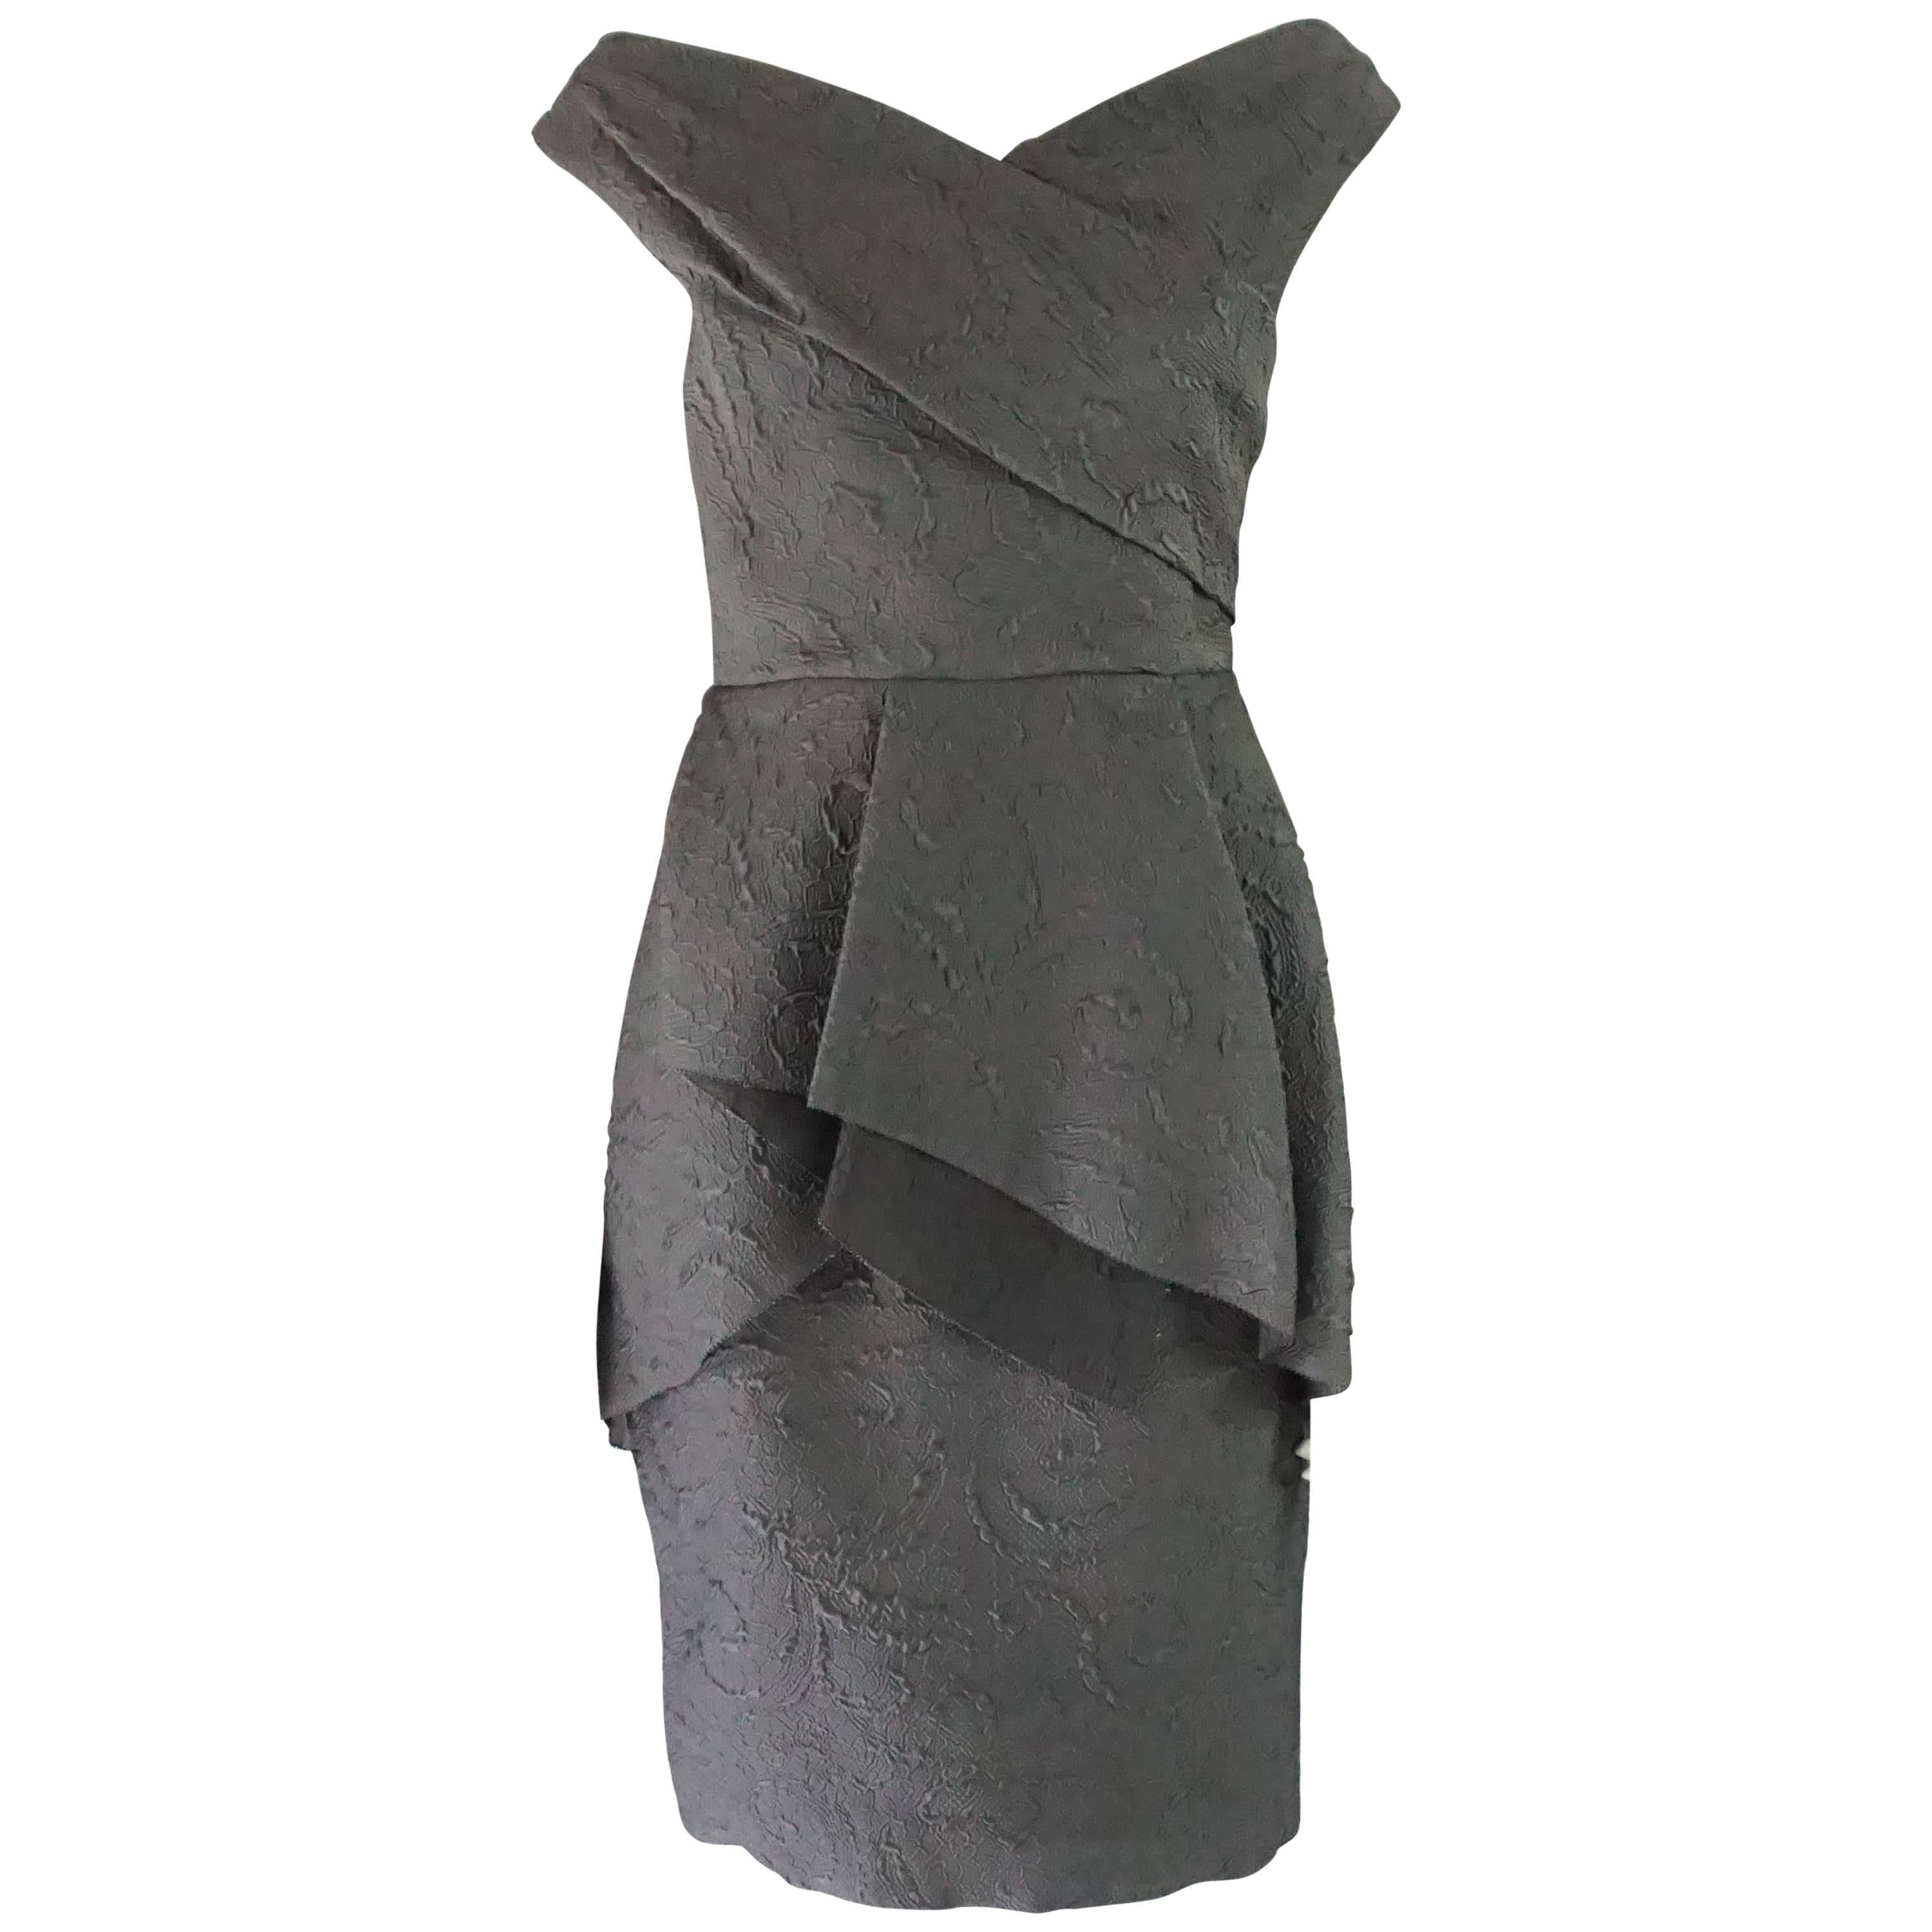 Lela Rose Charcoal Sleeveless Dress with Layered Front - 6